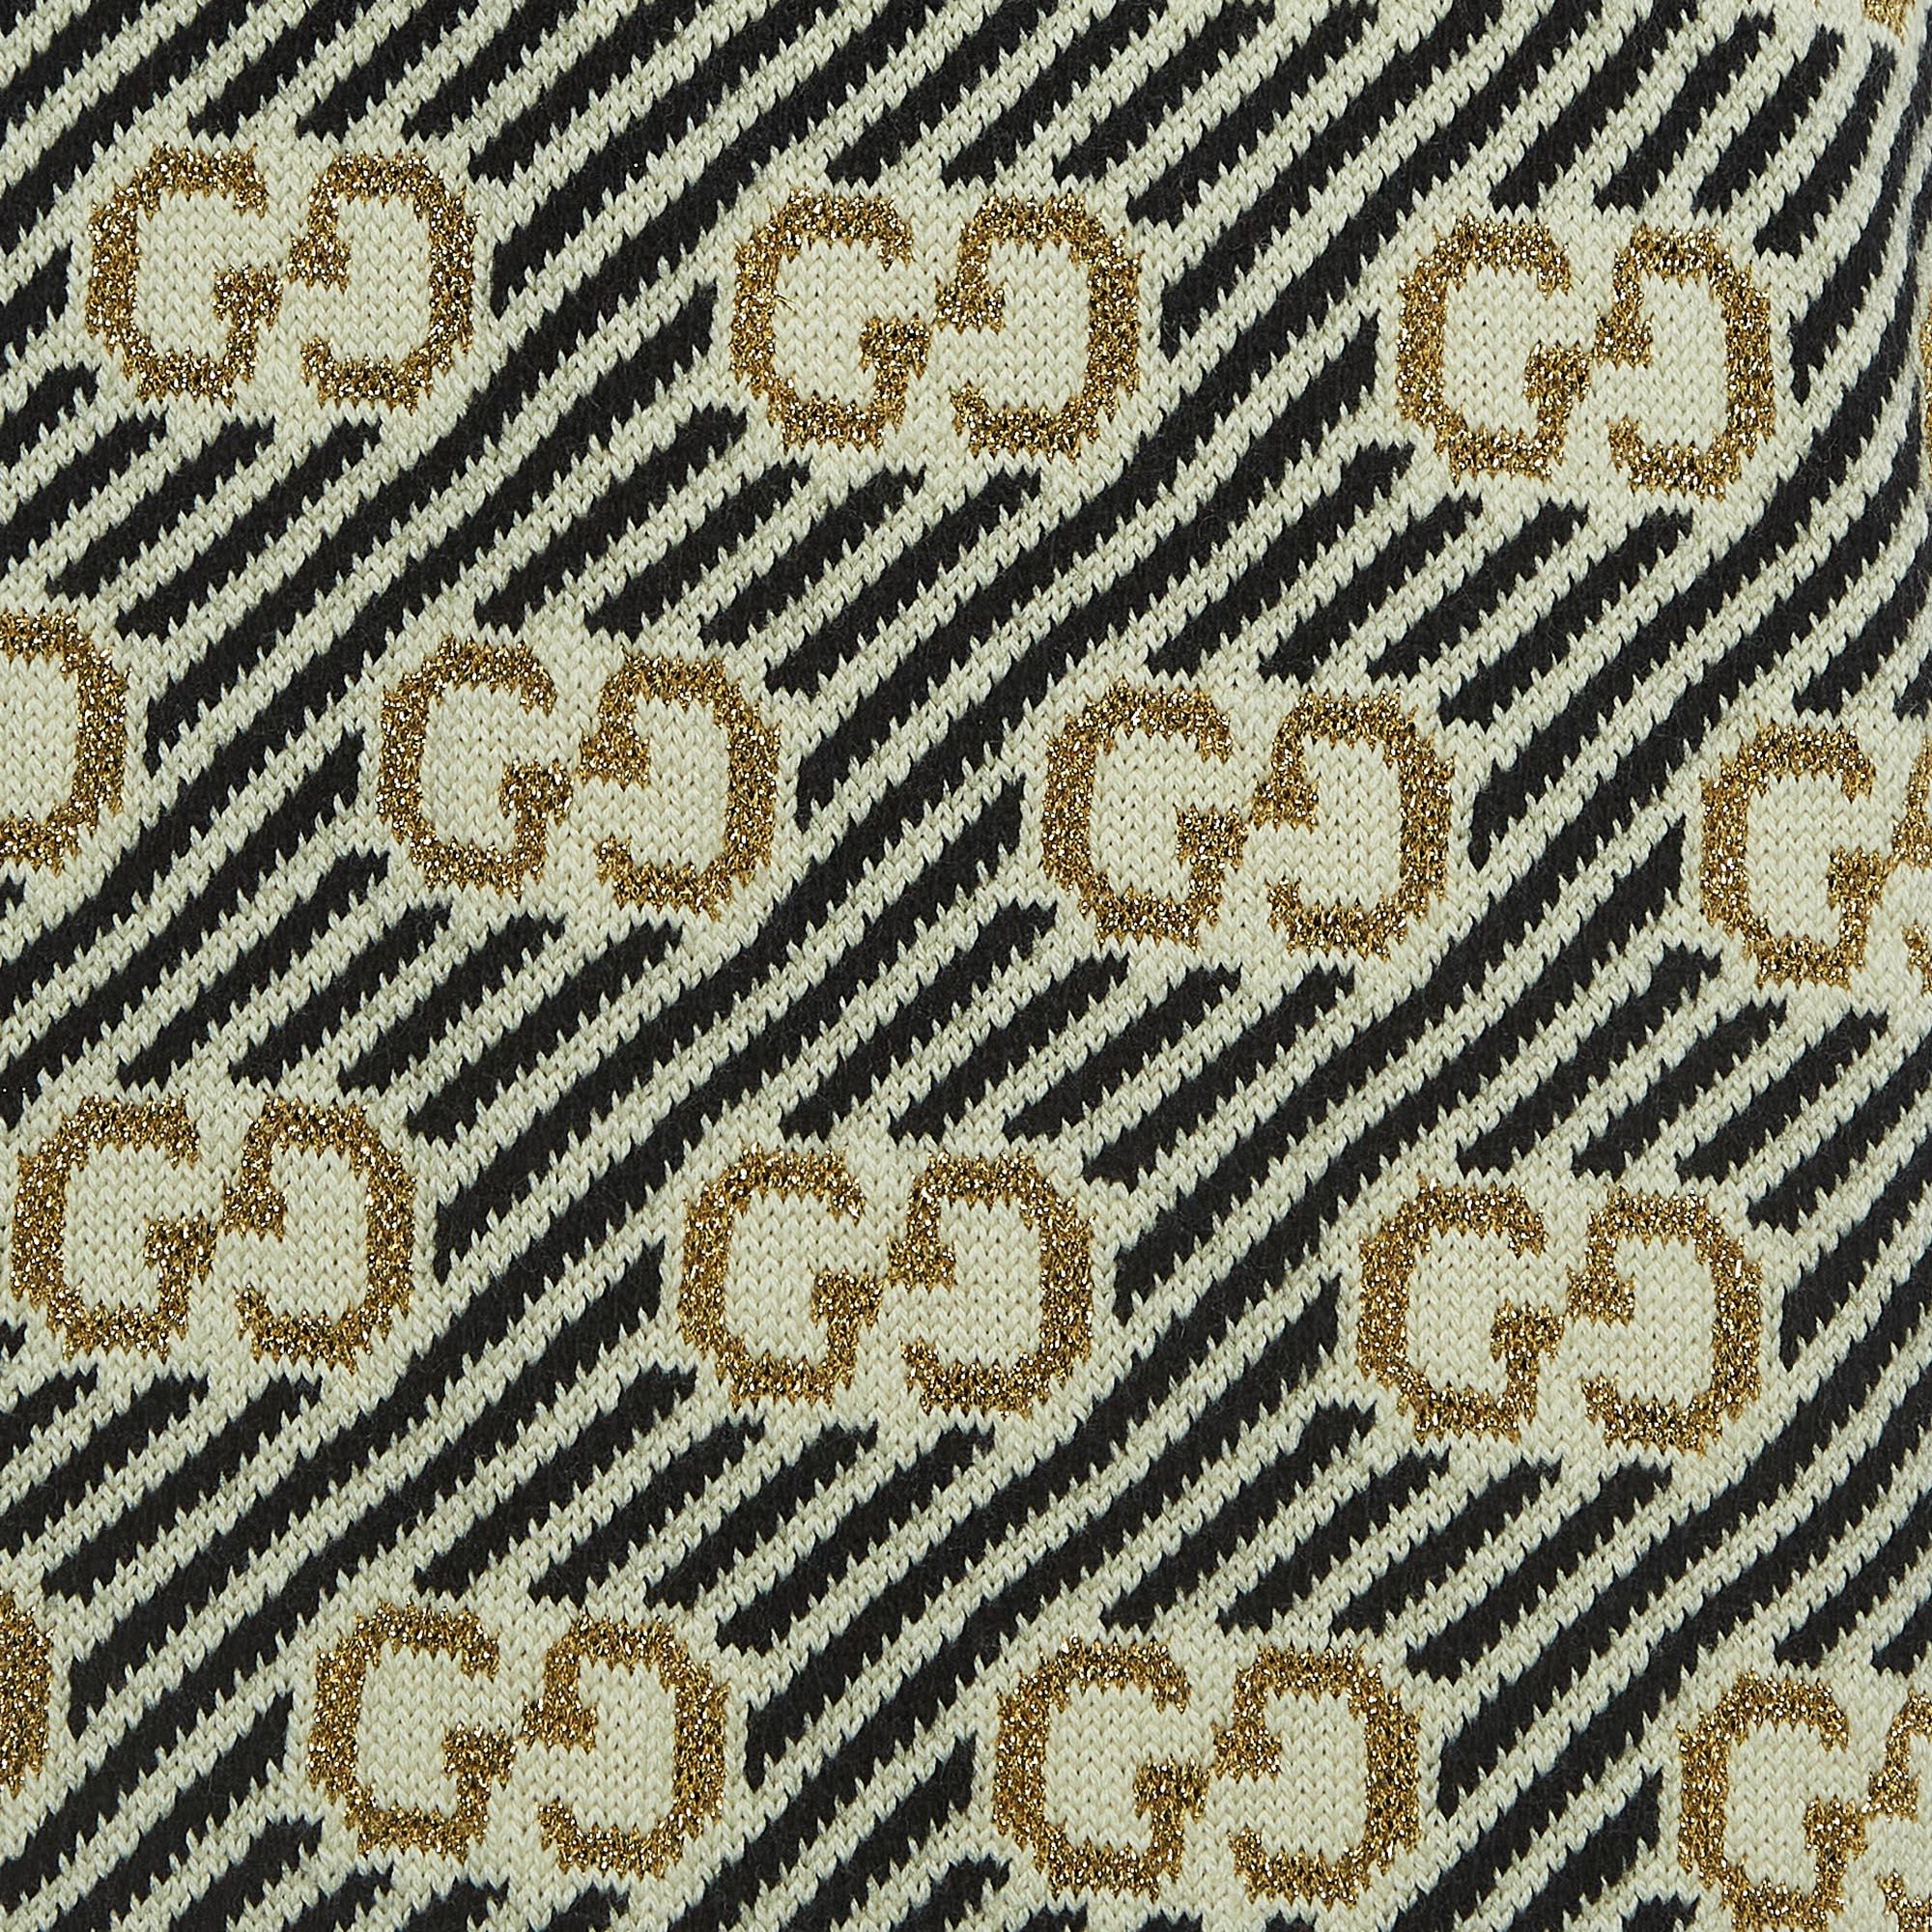 Women's Gucci Cream/Black GG Patterned Wool Knit Skirt S